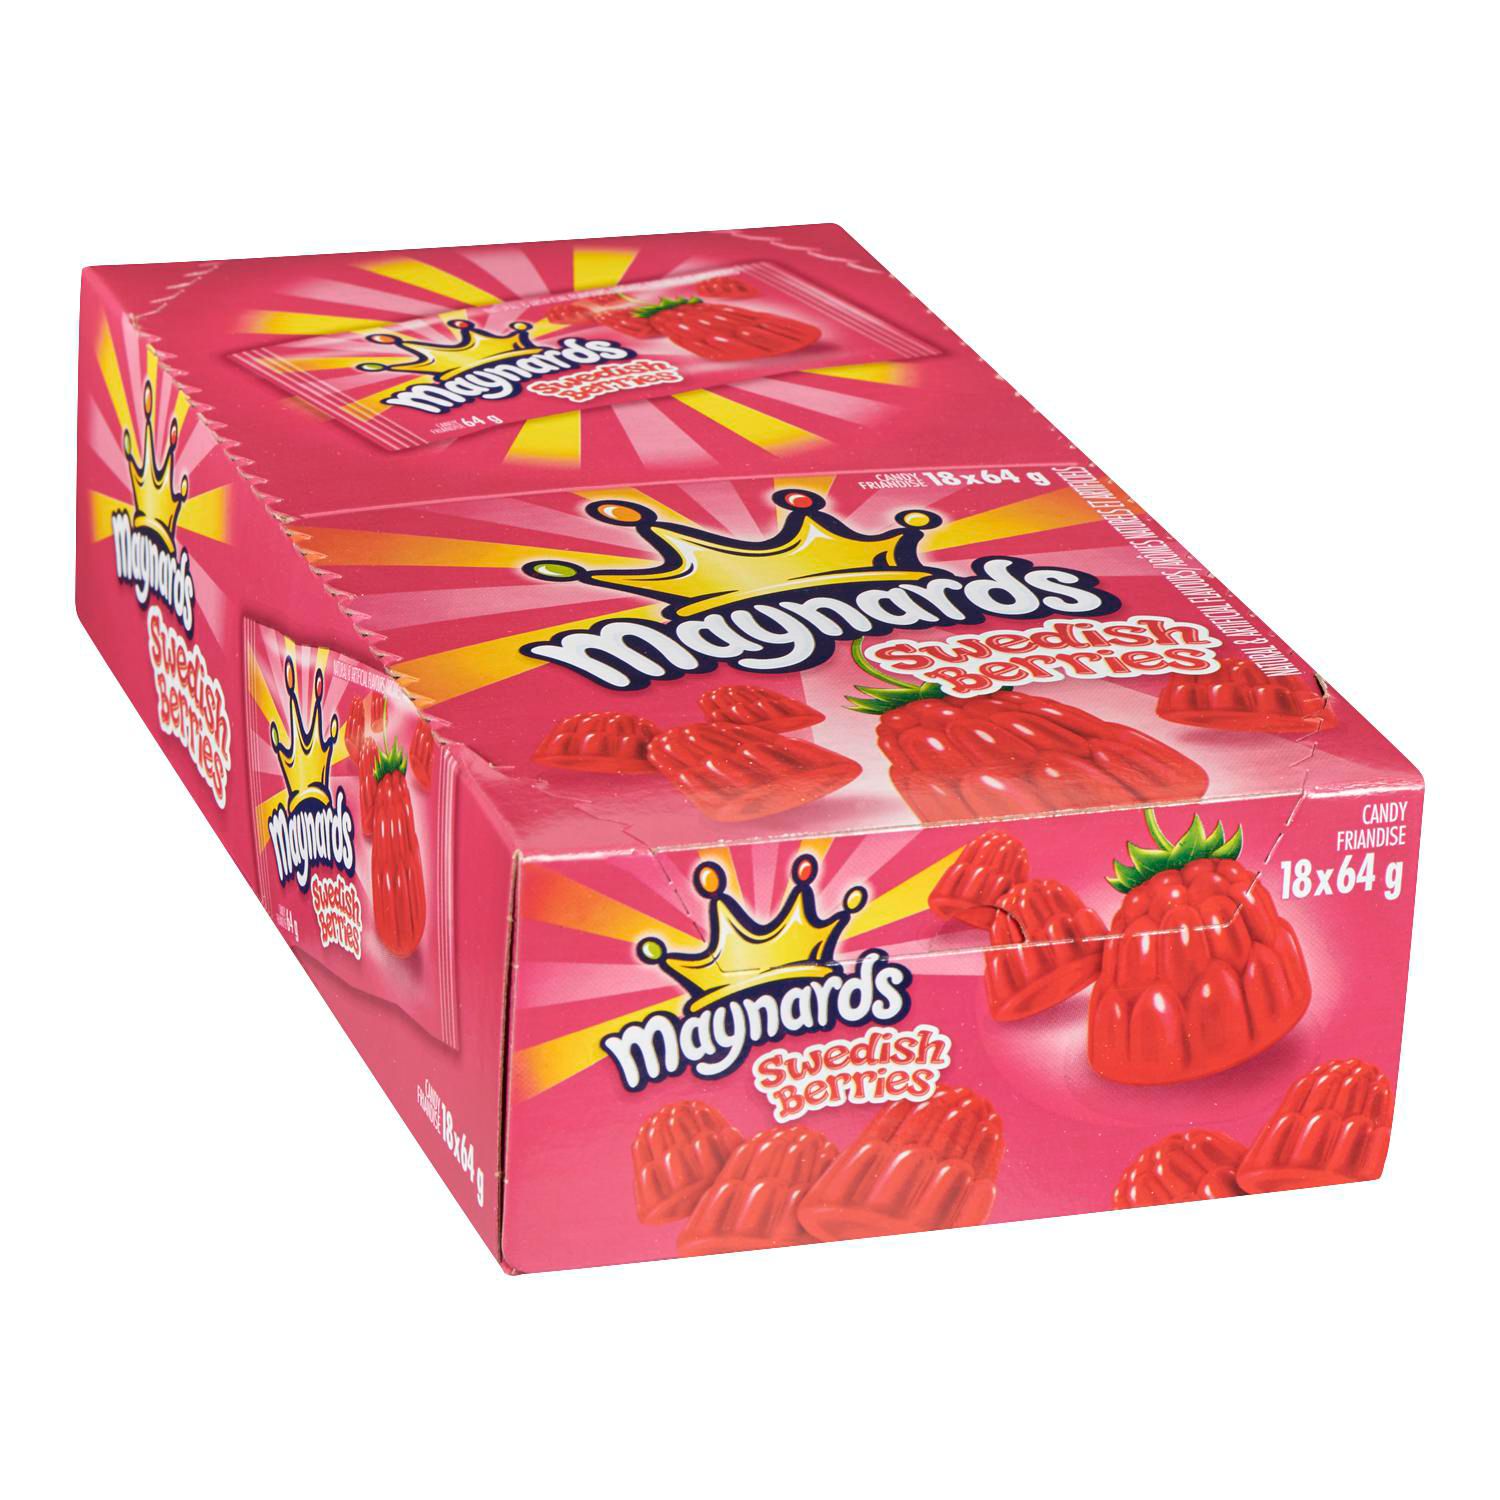 Maynards Swedish Berries Gummy Candy, 64g (Pack of 18)-2